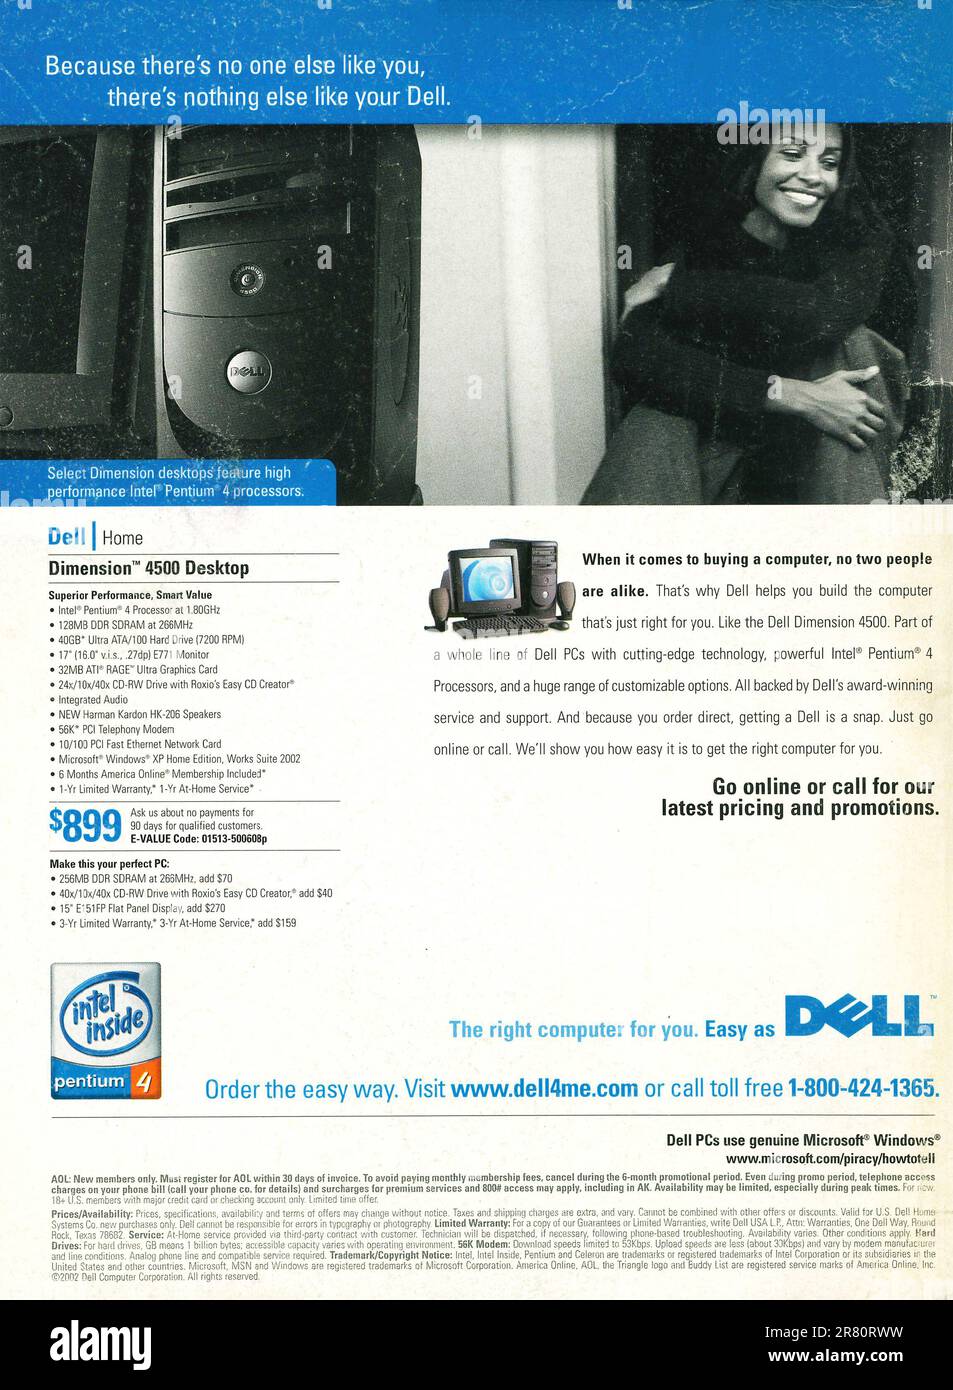 DELL desktop computer with Intel Pentium 4 processor advert in a magazine  June 2002 Stock Photo